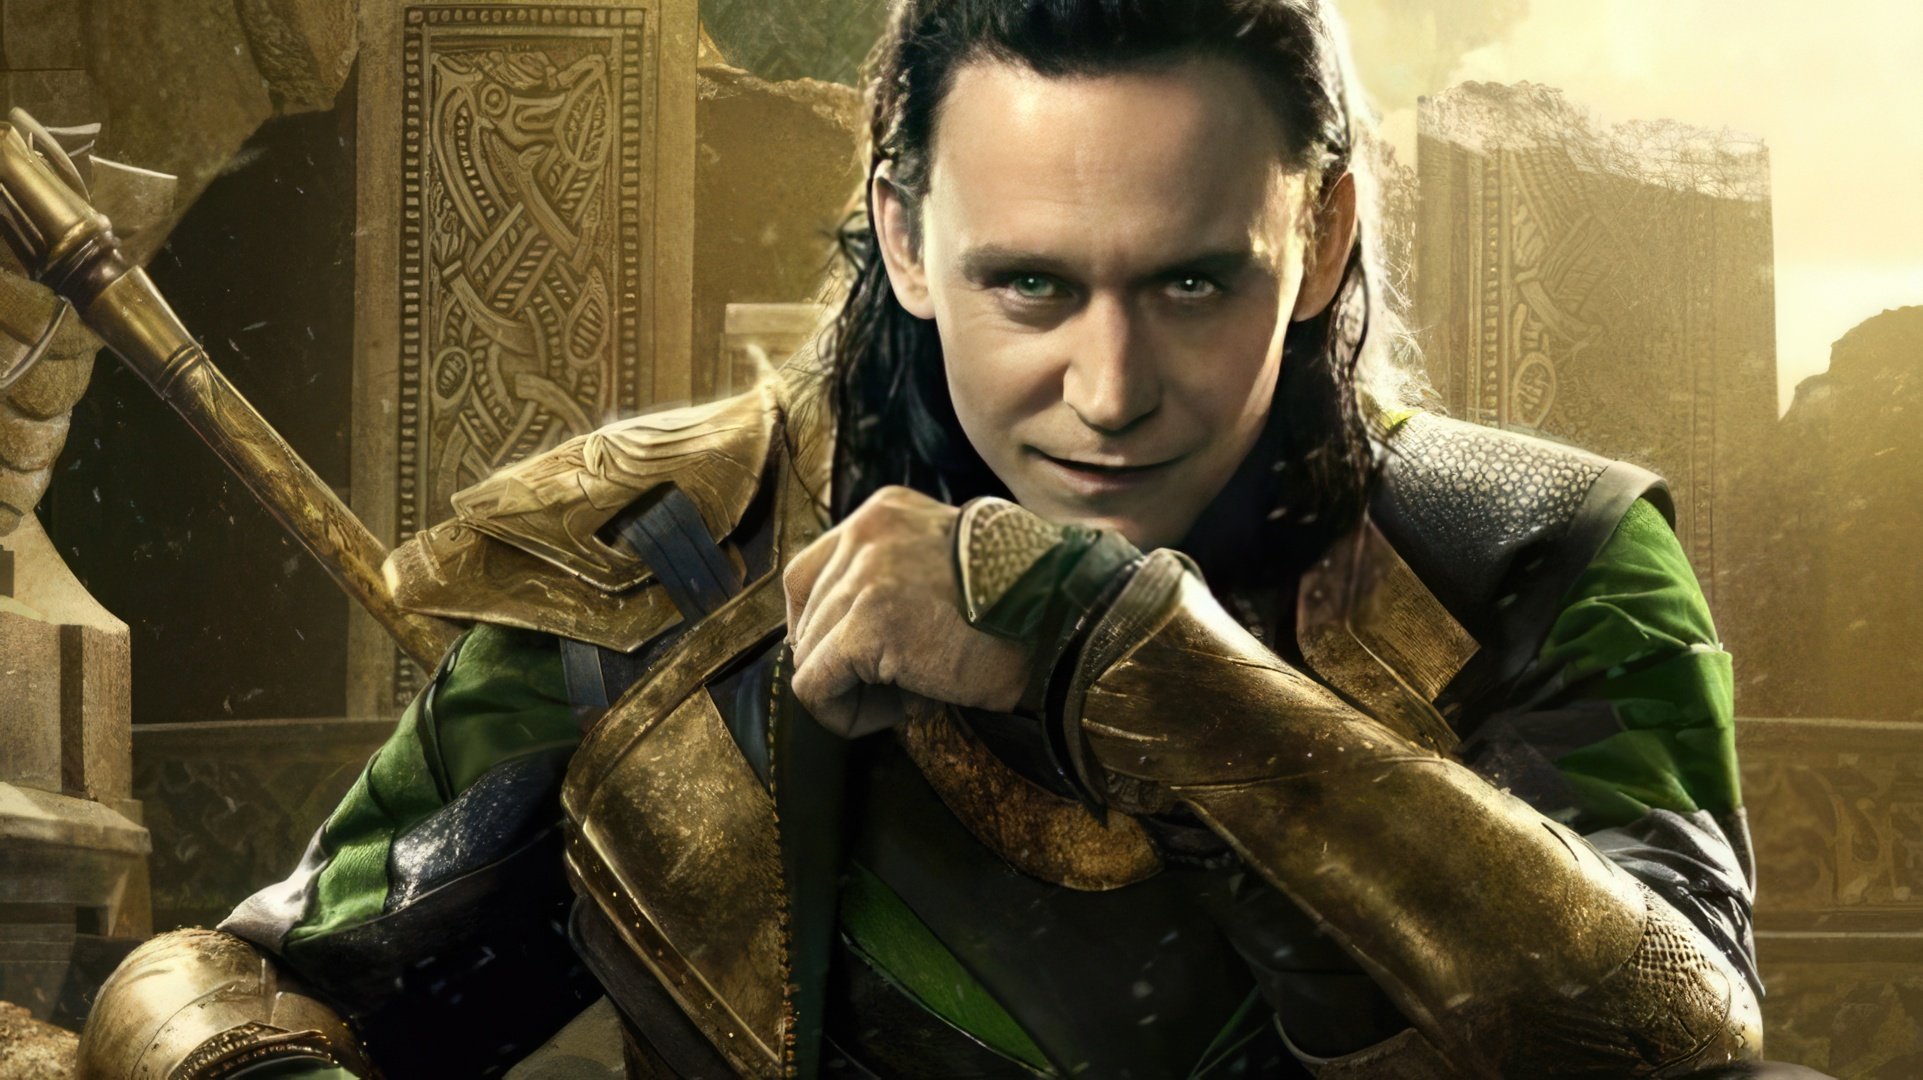 In 2021 we will see Tom Hiddleston as Loki again